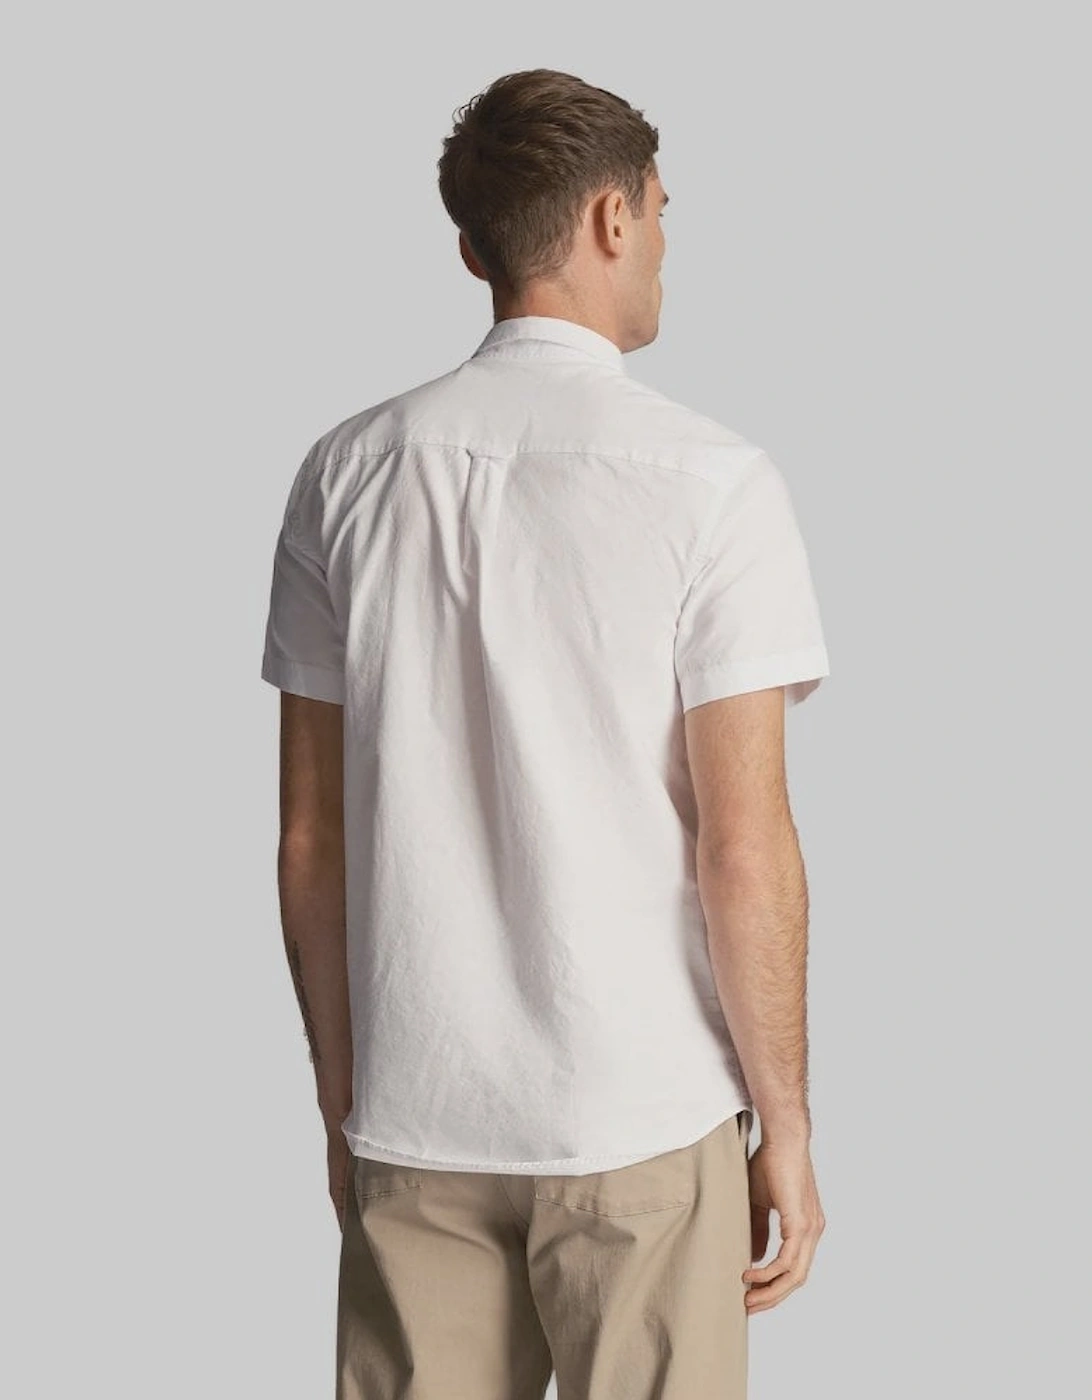 Lyle & Scott Short Sleeve Oxford Shirt - White